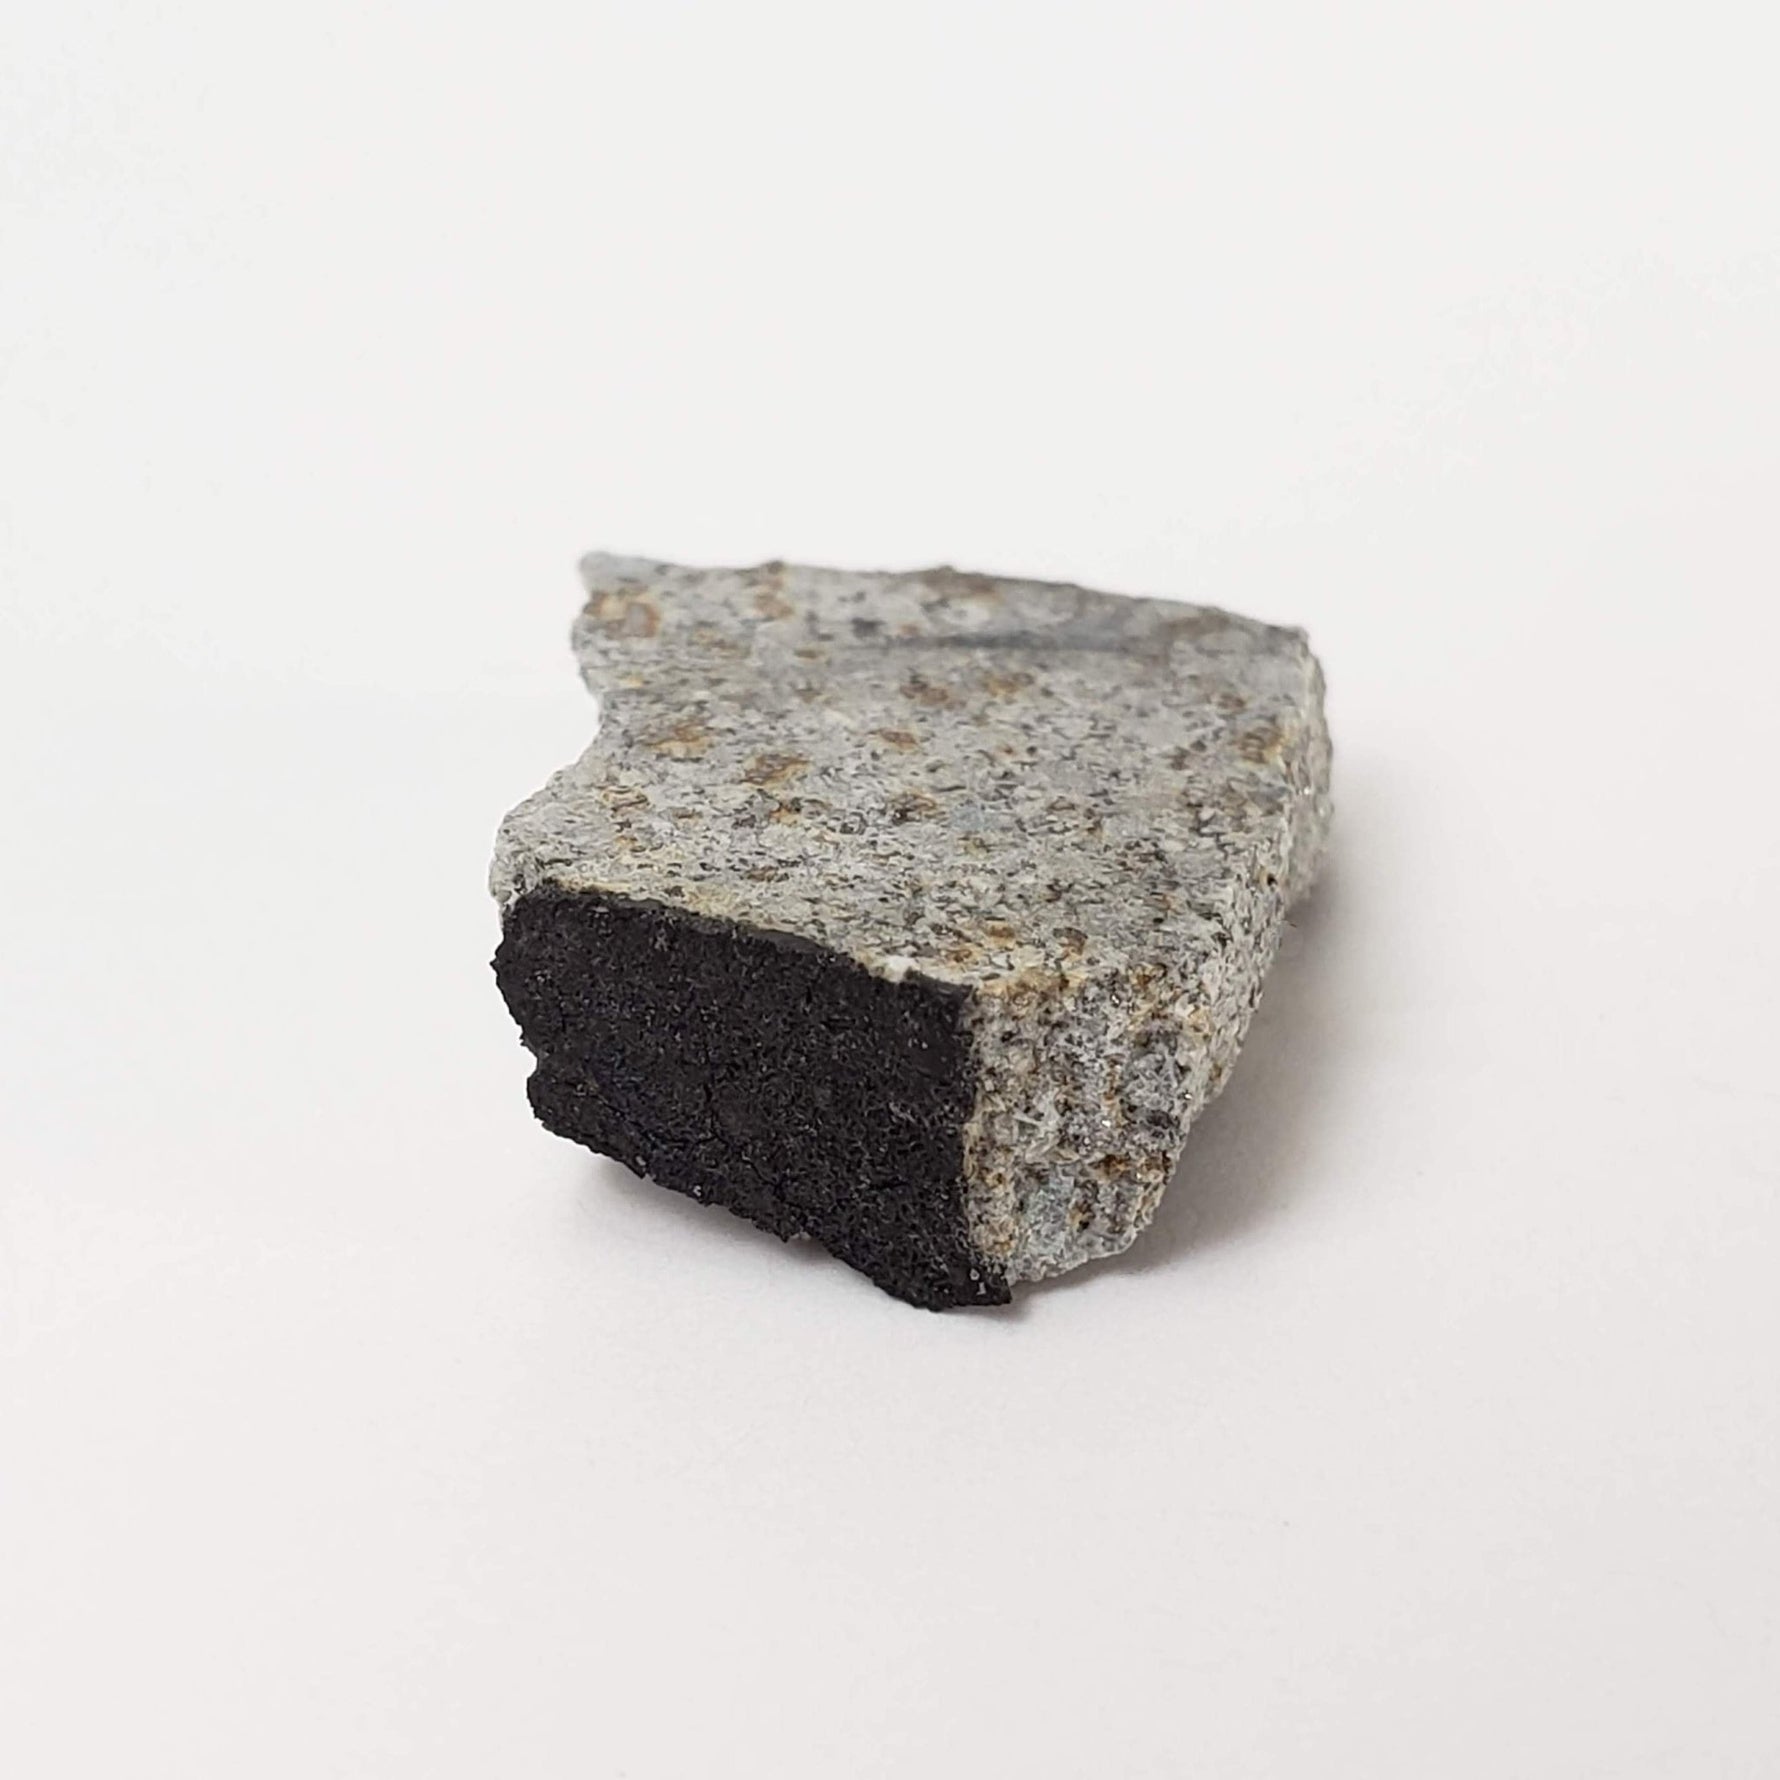 Bruderheim Meteorite | 1.88gr | Part Slice | L6 Class | Observed Fall 1960 Canada | Canagem.com